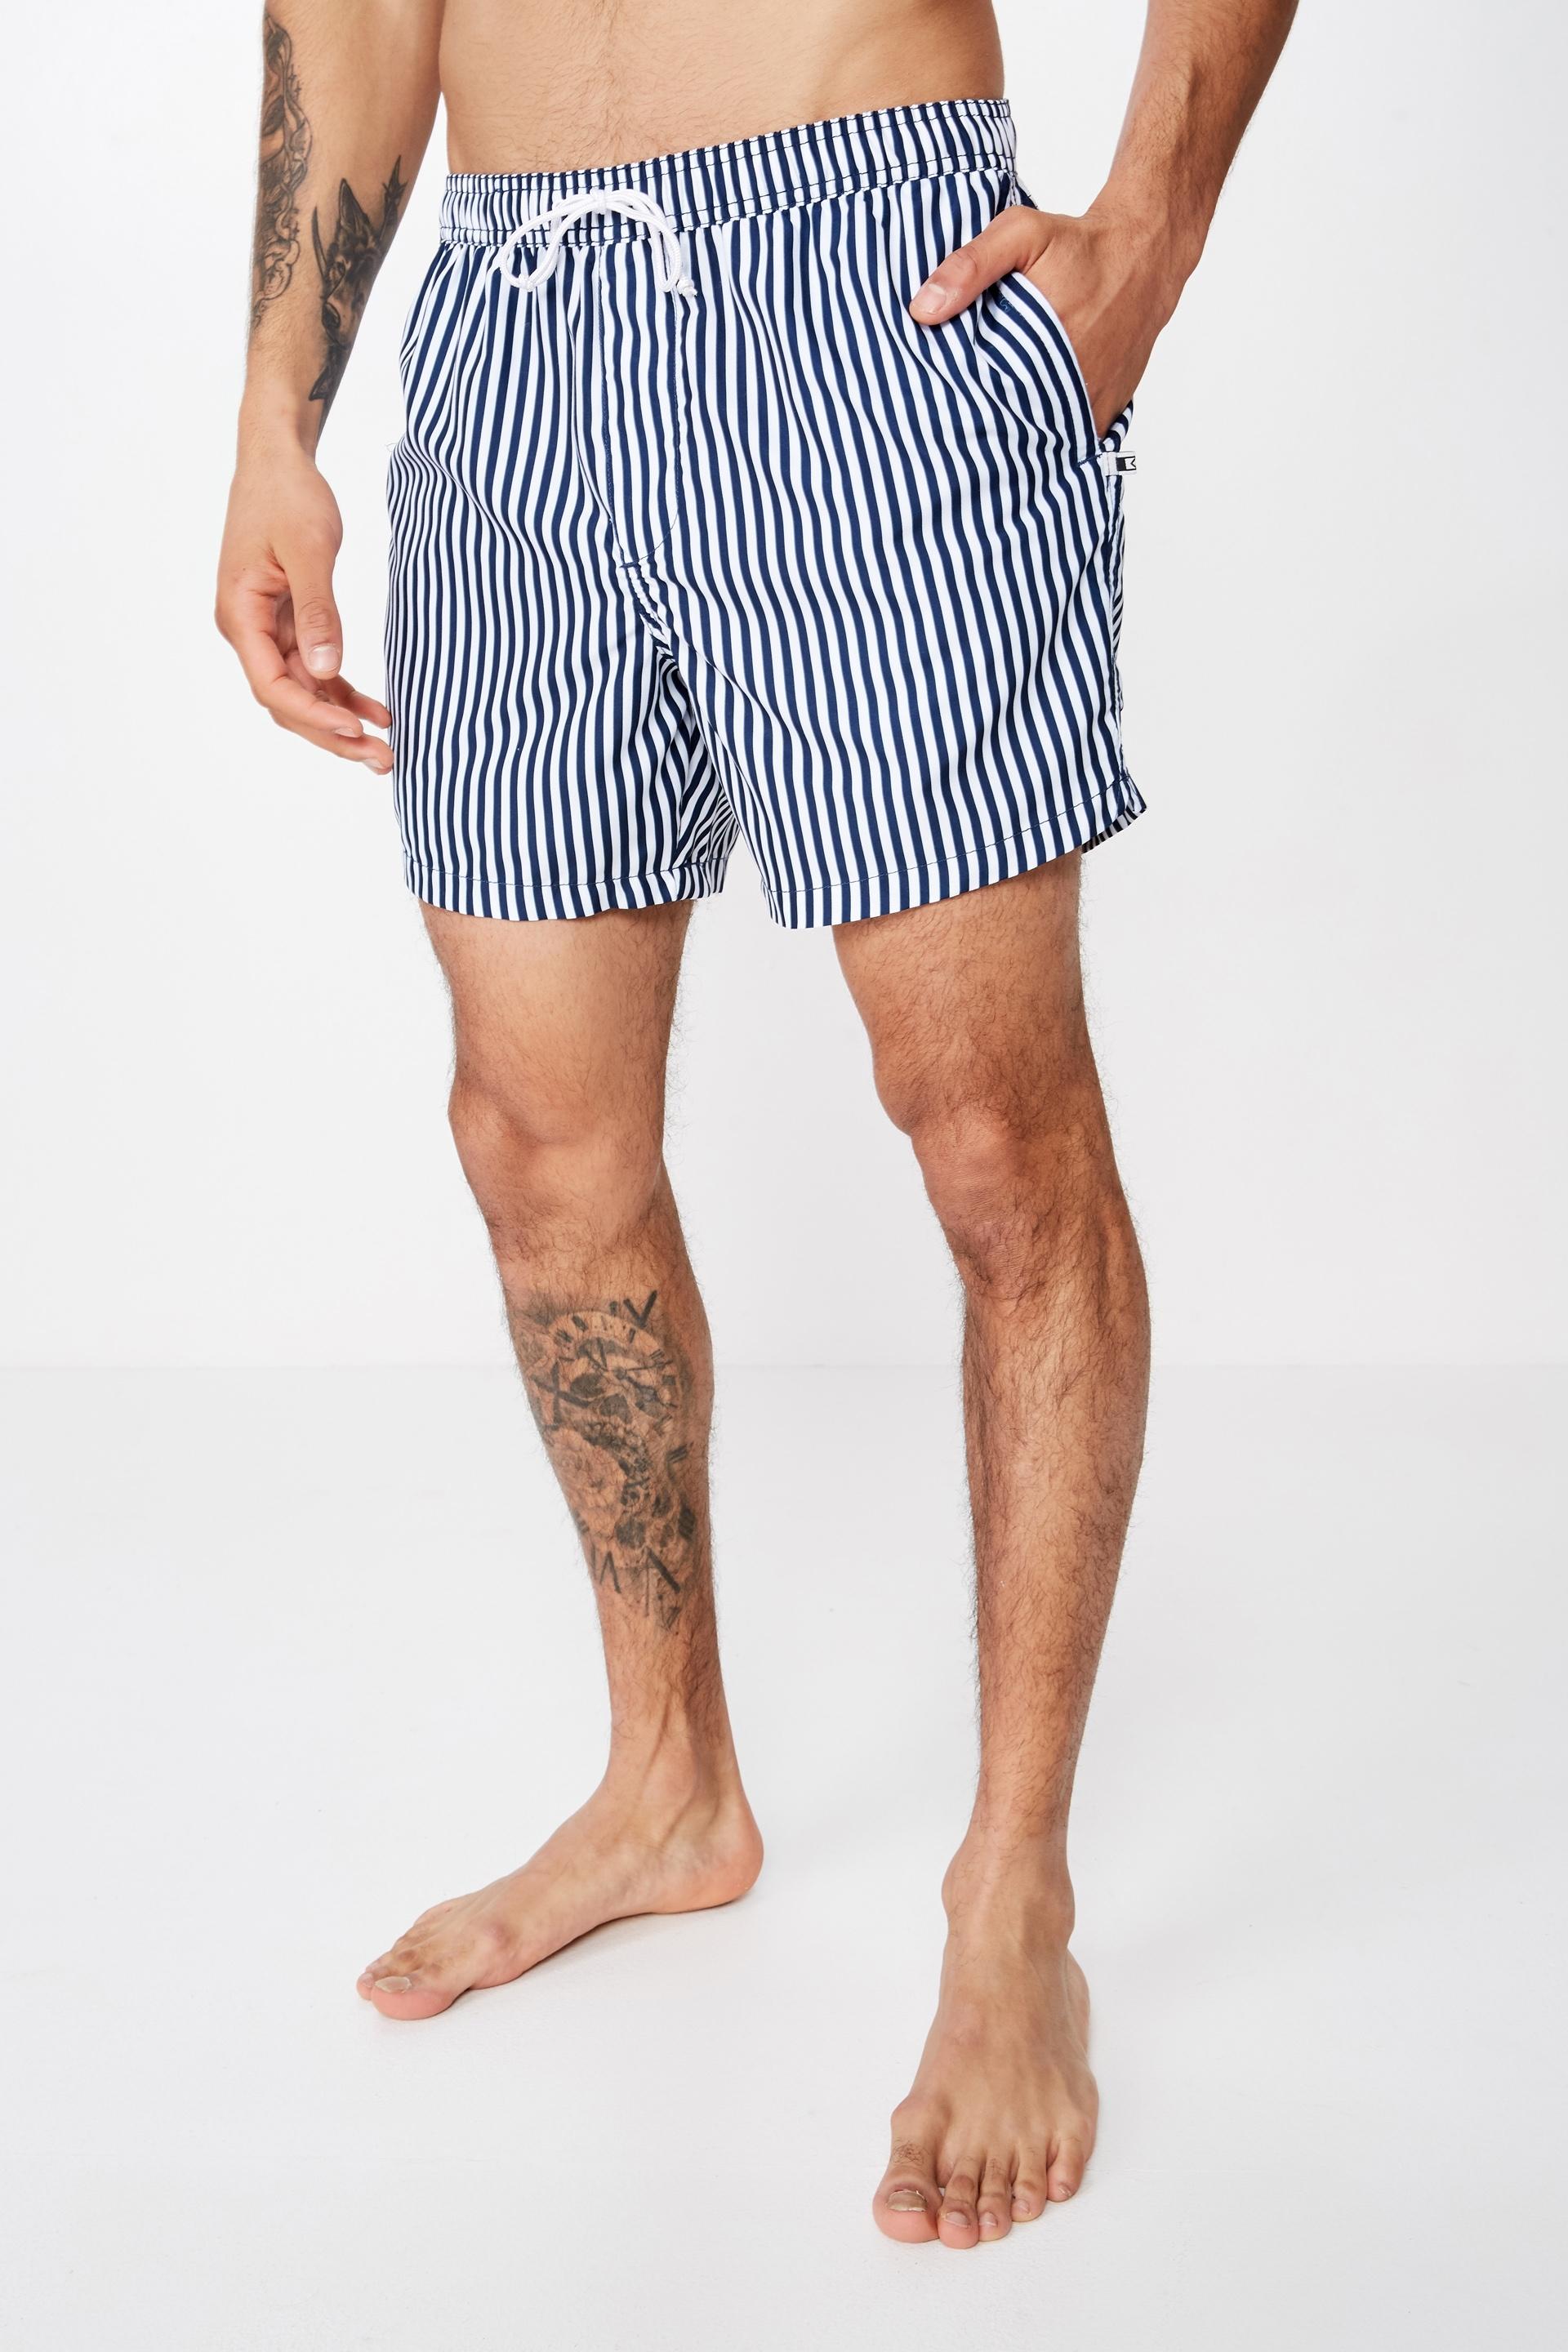 Basic swimshorts - navy/white stripe Cotton On Swimwear | Superbalist.com